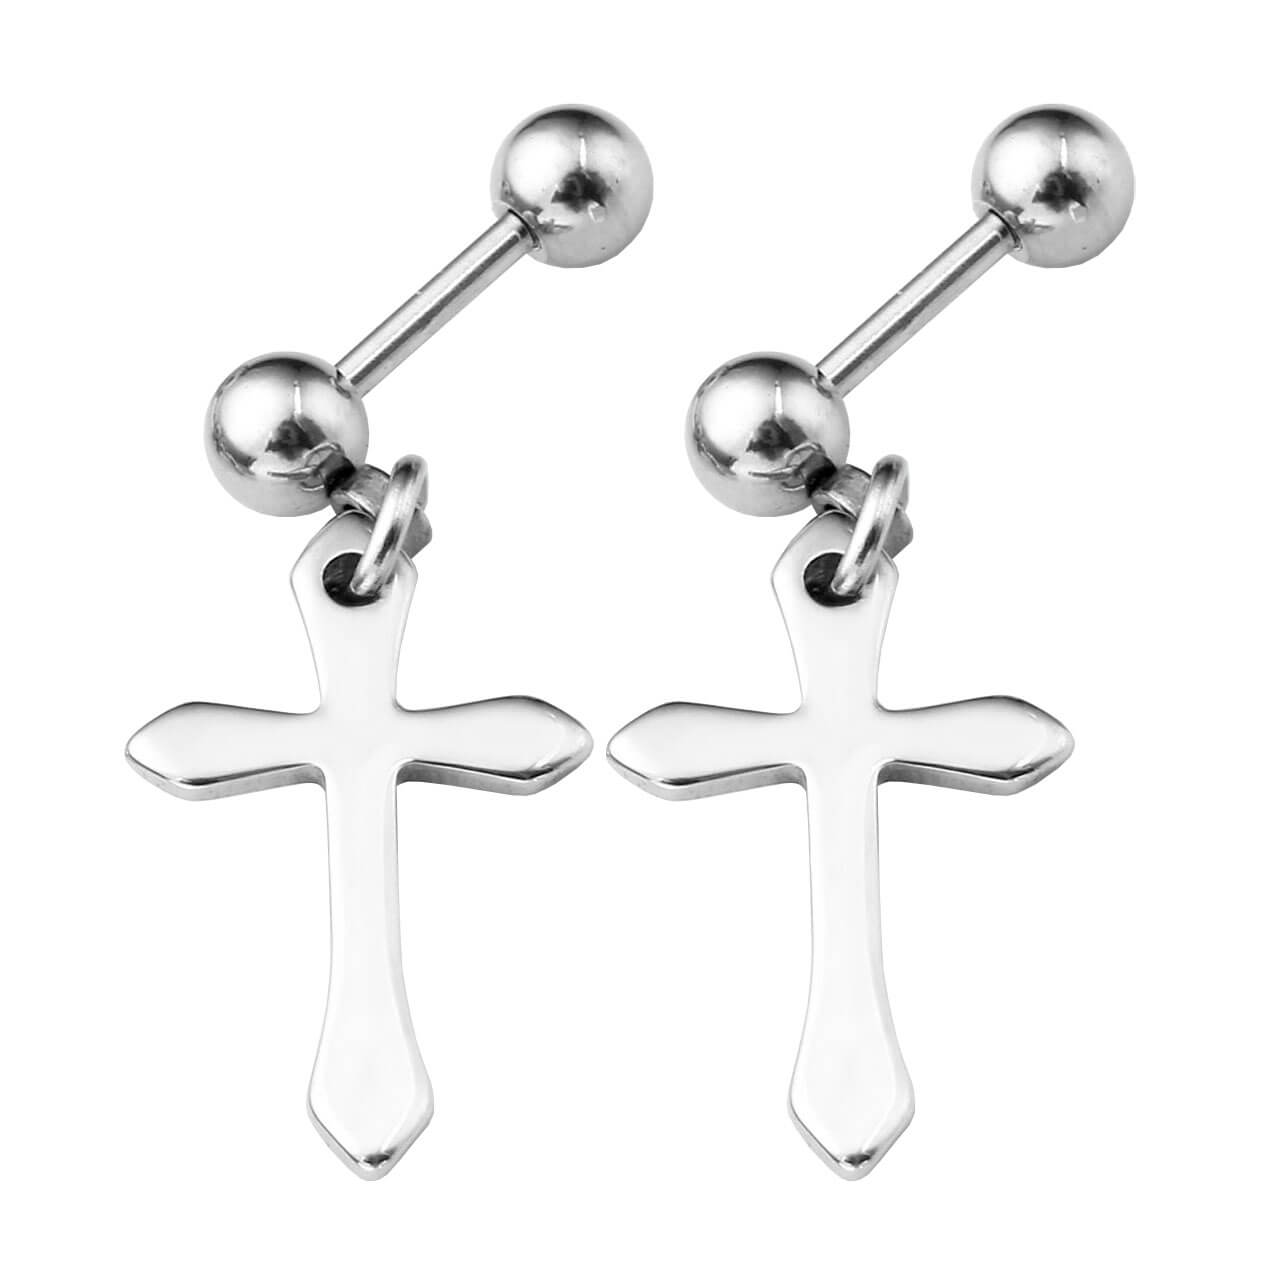 Jovivi unisex cross studs ear barbell earrings Stainless Steel Cross Barbell Stud Earrings gift Tragus Cartilage Helix Earrings